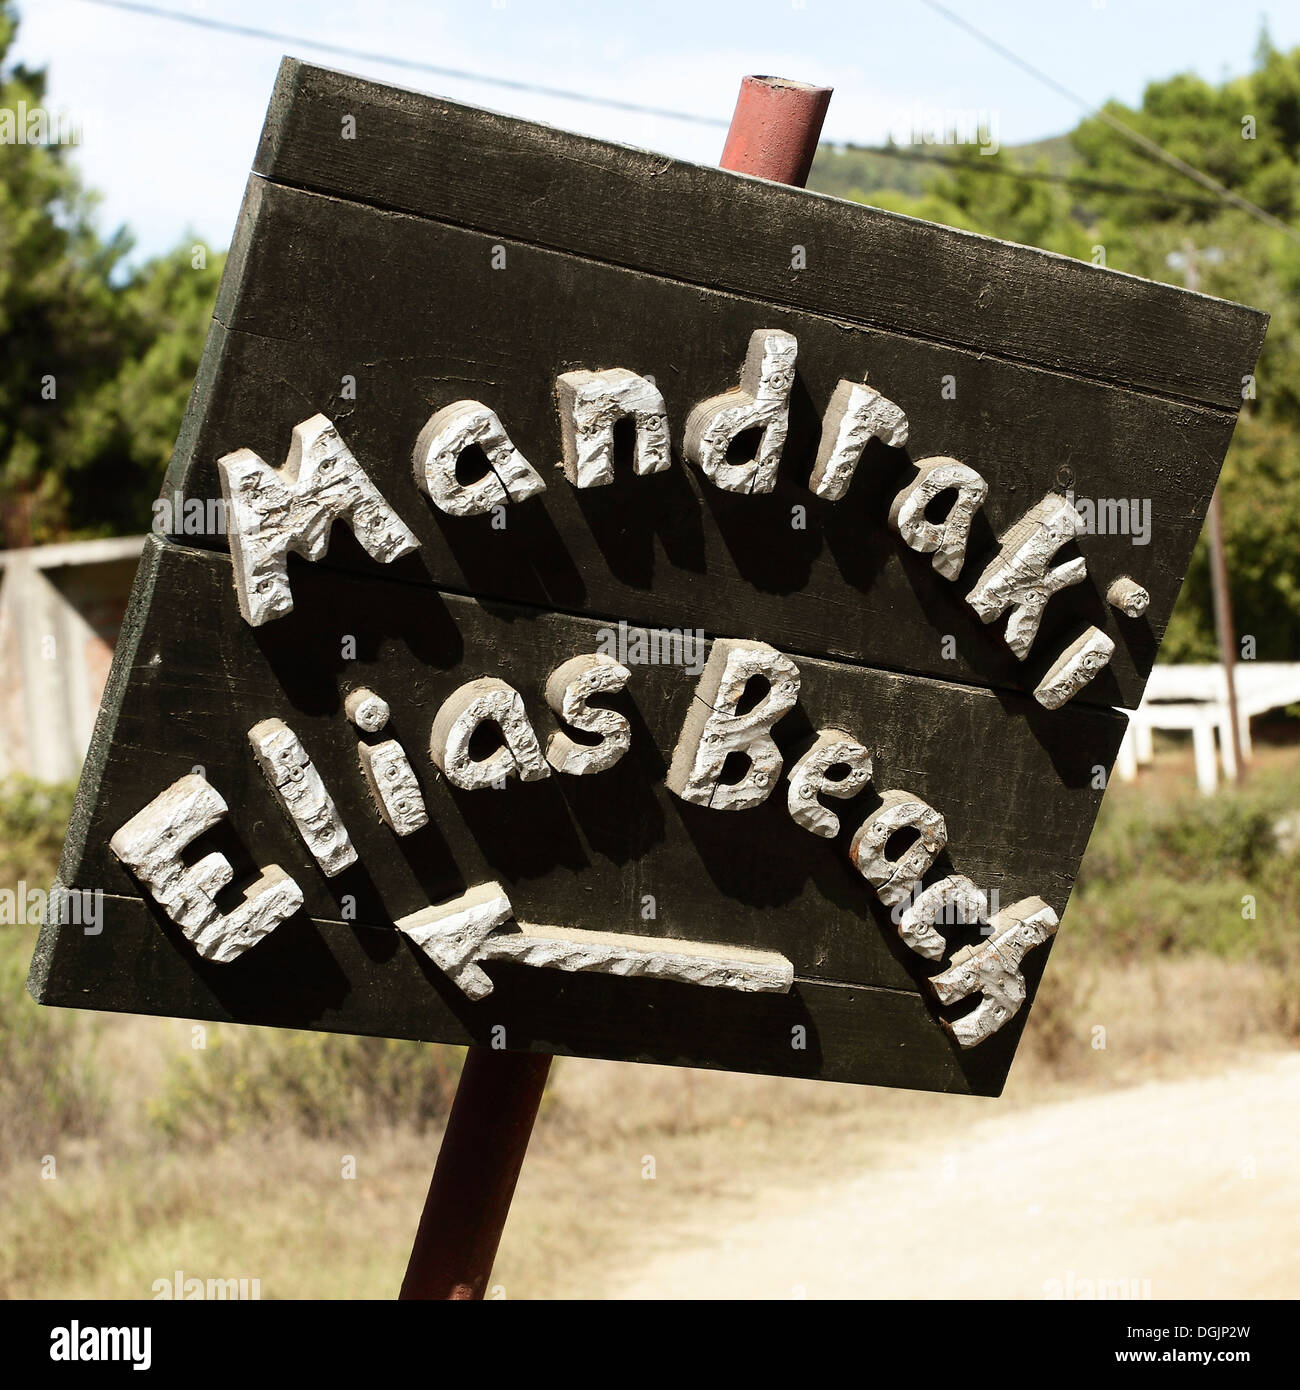 A tourist sign showing the direction to Mandraki Elias Beach on the Greek Island of Skiathos in the Aegean Sea. Stock Photo